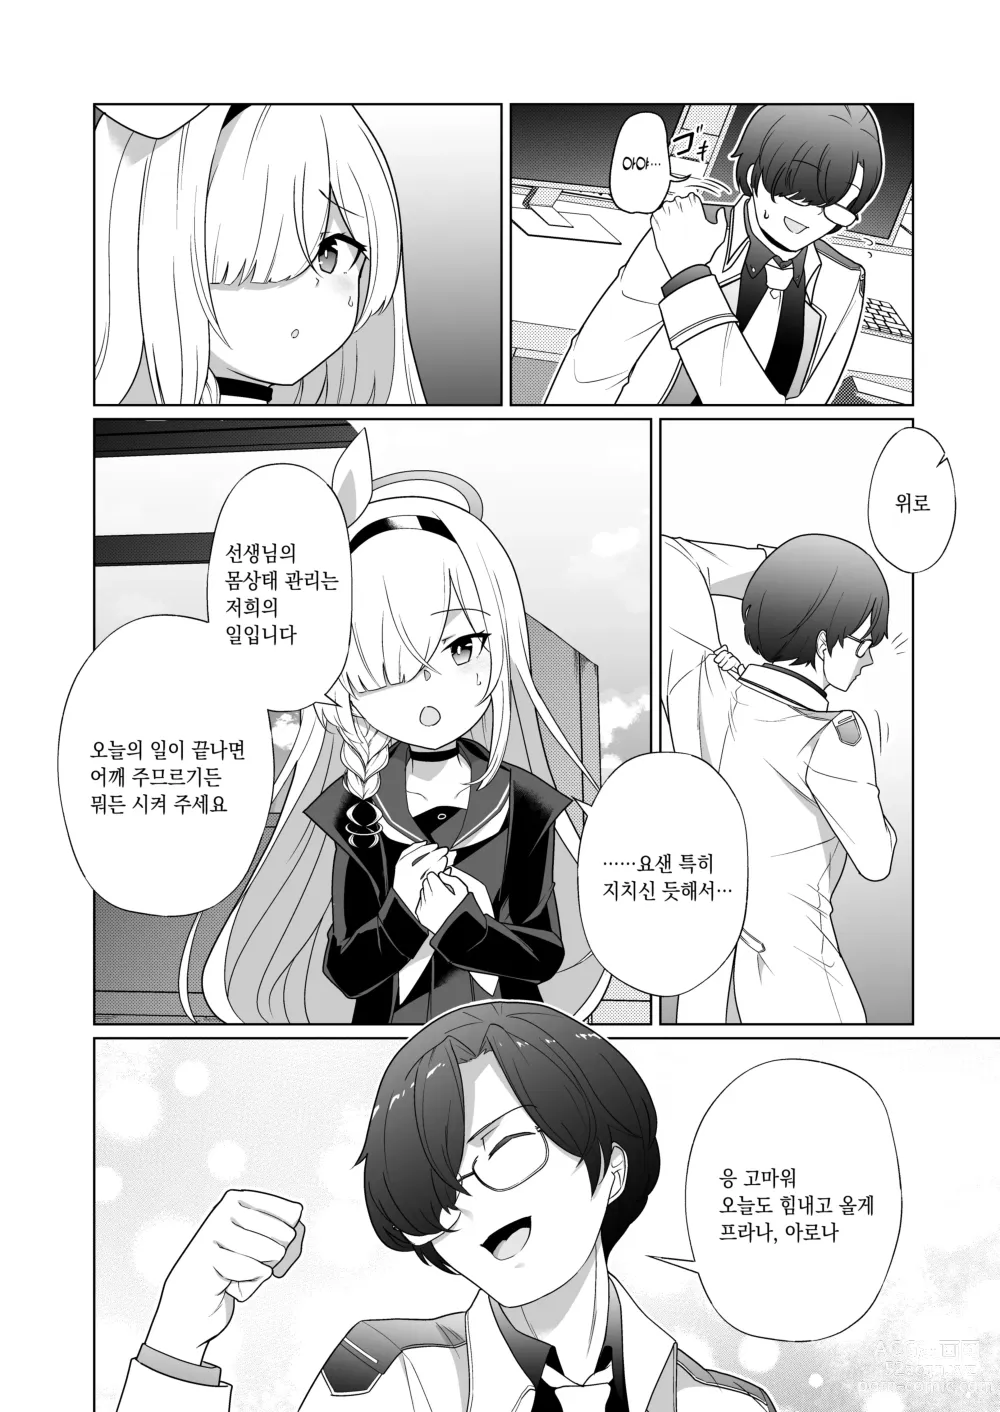 Page 3 of doujinshi 싫어하는 프라나가 기꺼이 봉사하는 이야기